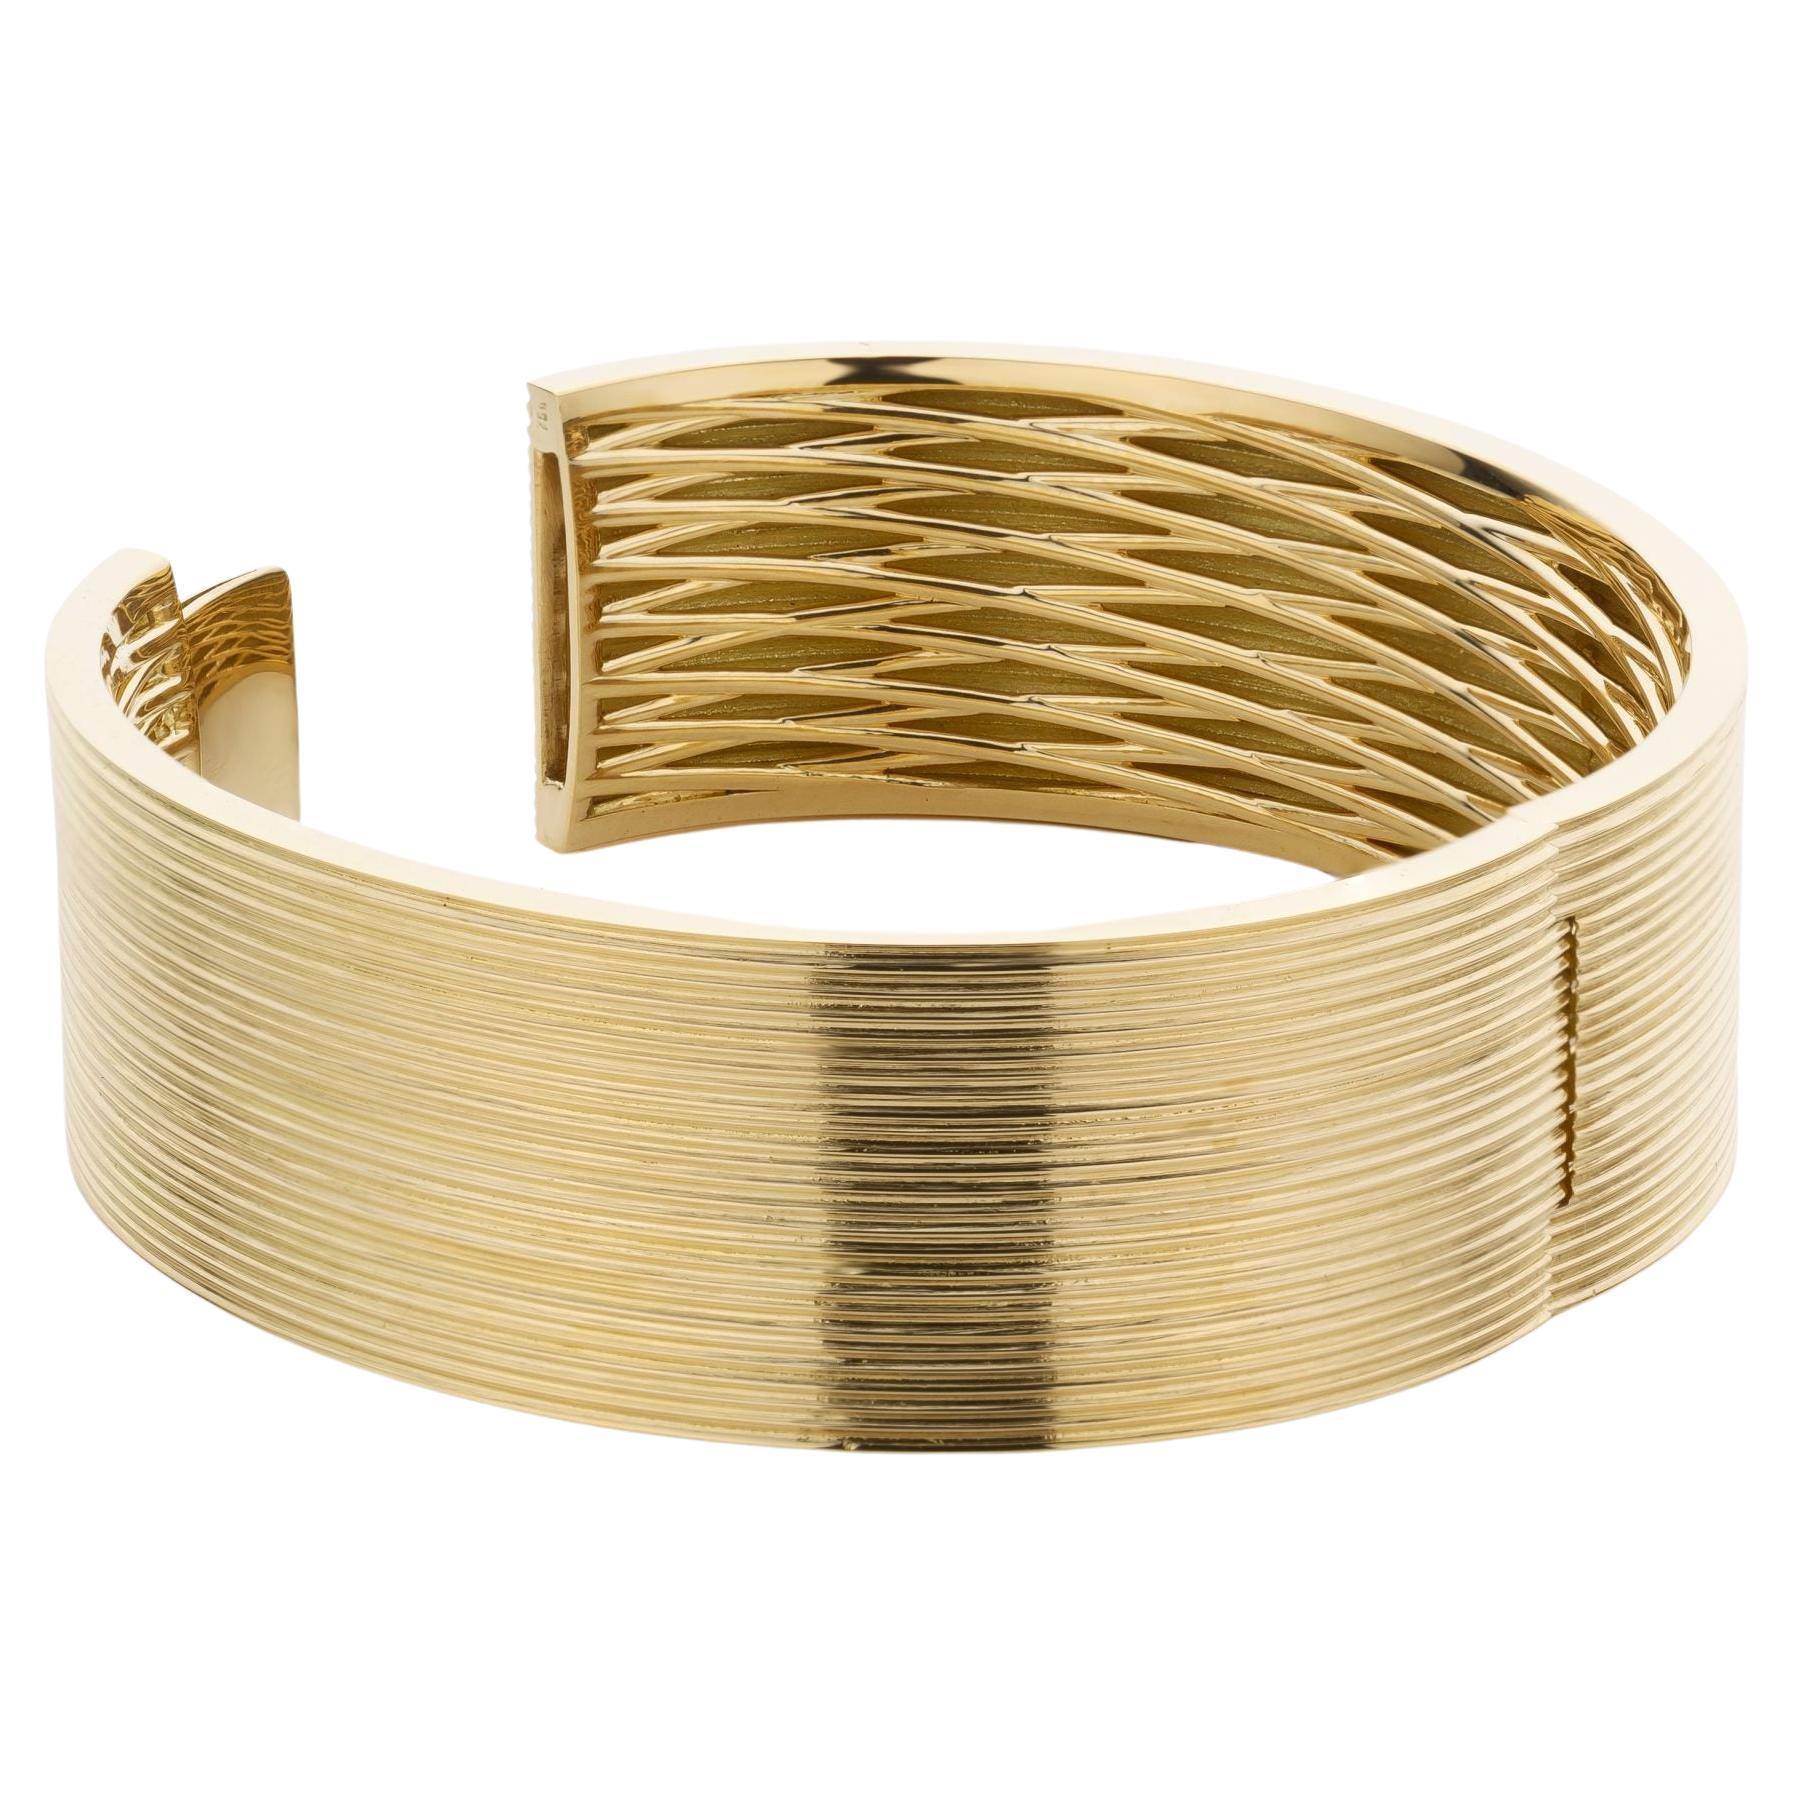 Cober forever-closed “Fine Lines” 18 Carat Yellow Gold Width Bracelet